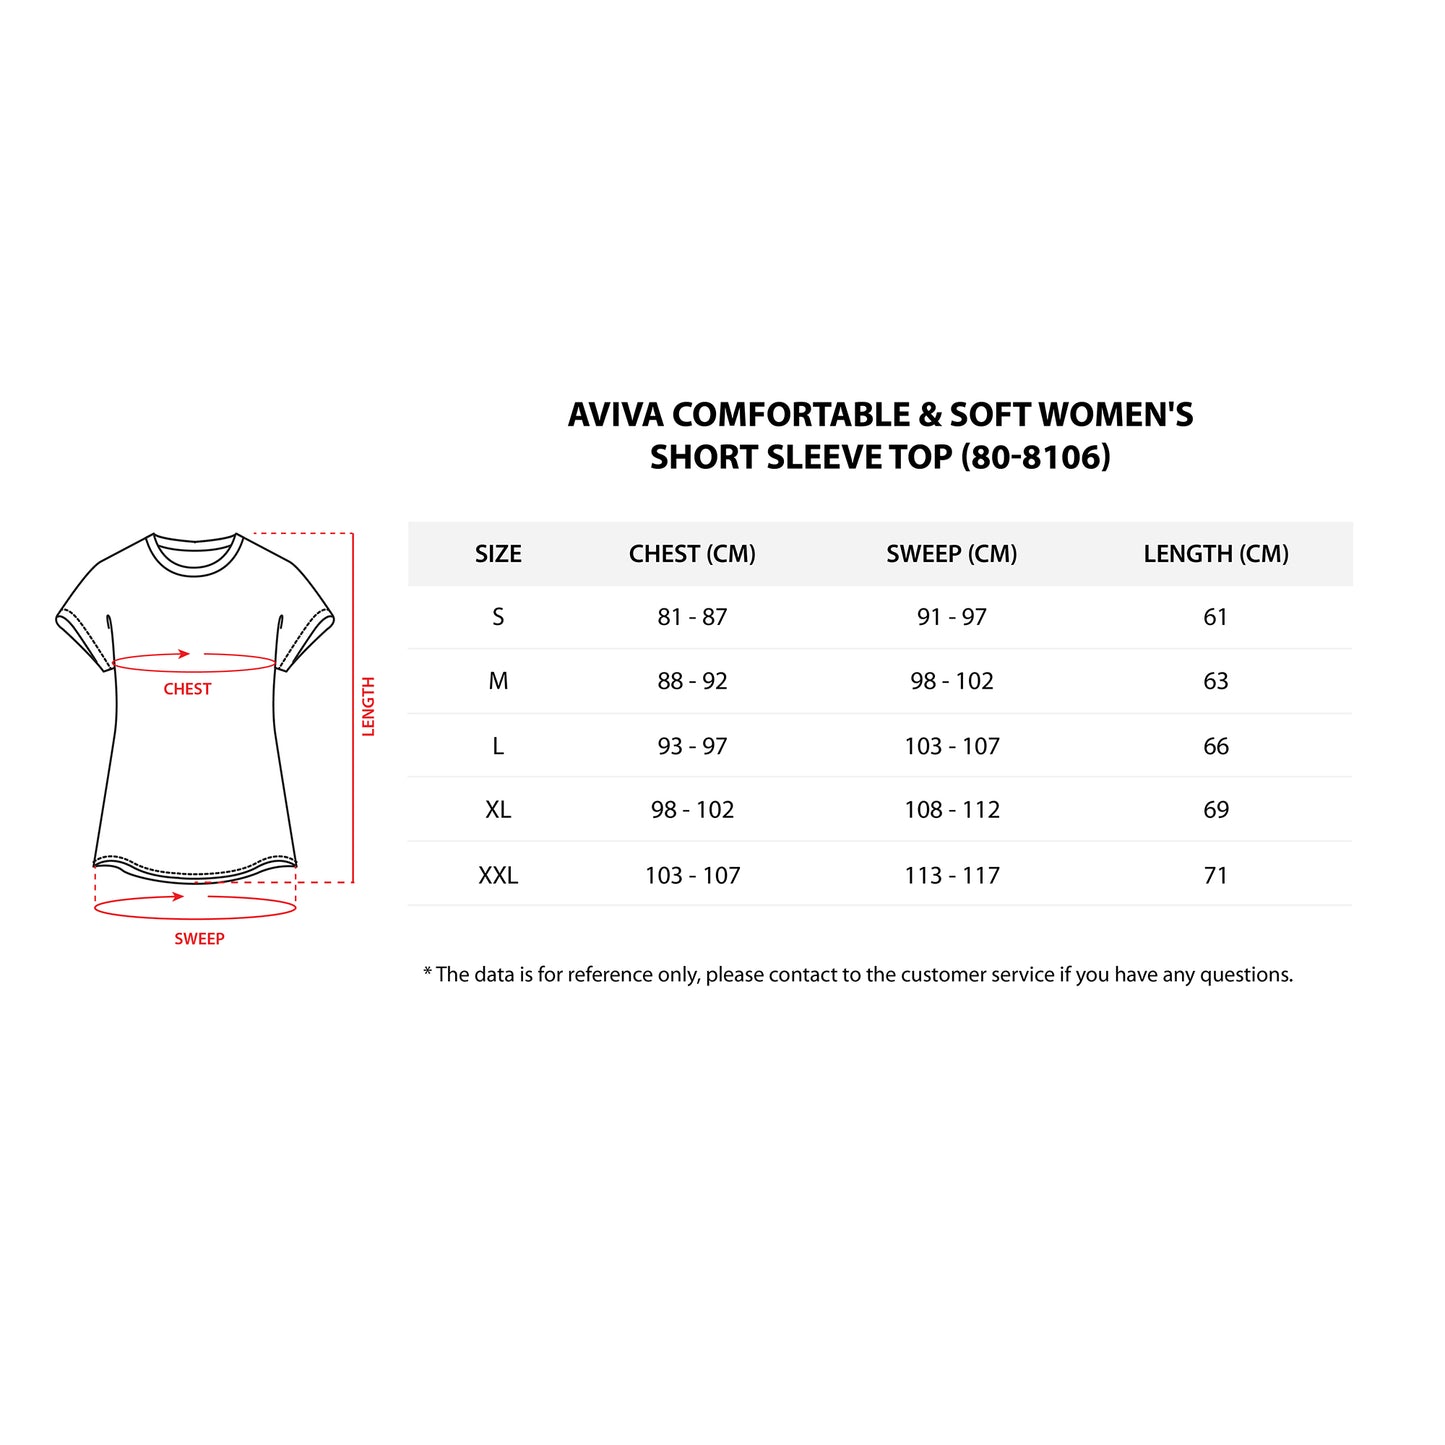 Aviva Comfortable & Soft Women's Short Sleeve Top (80-8106)